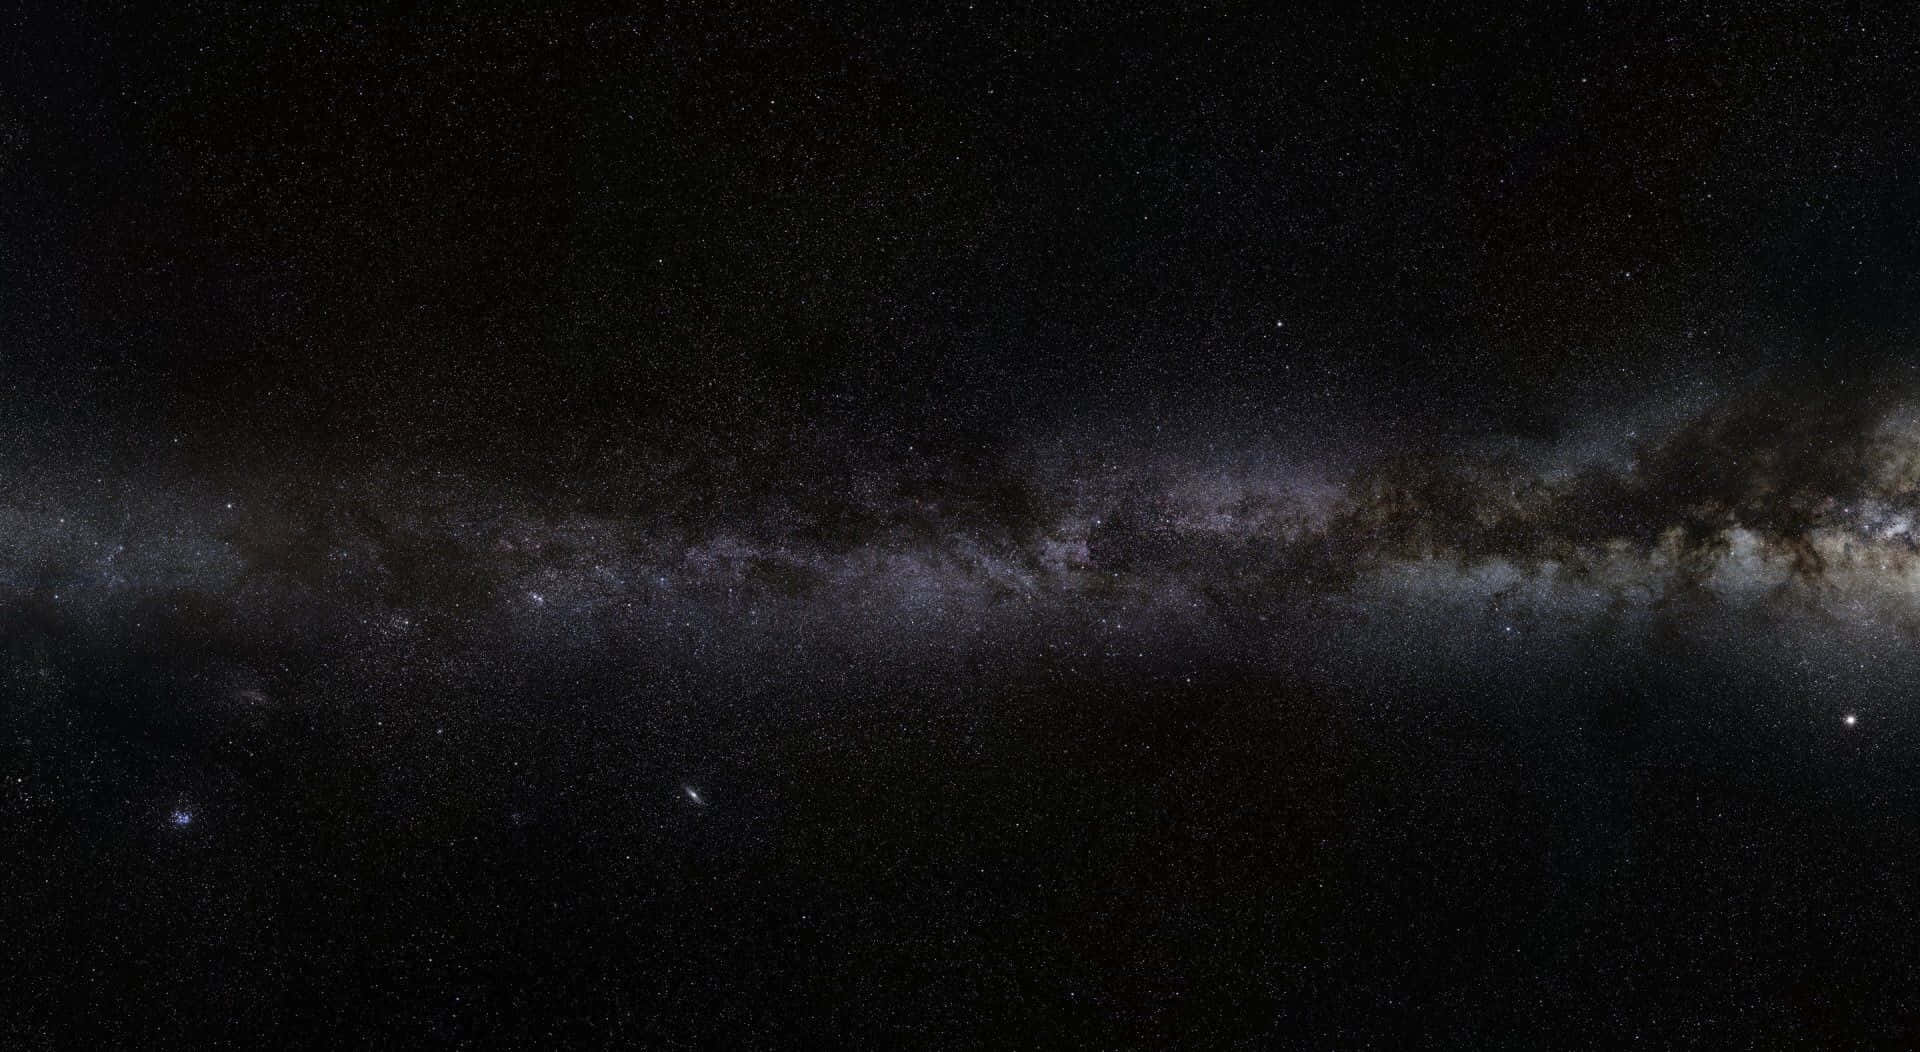 Milky Way Background